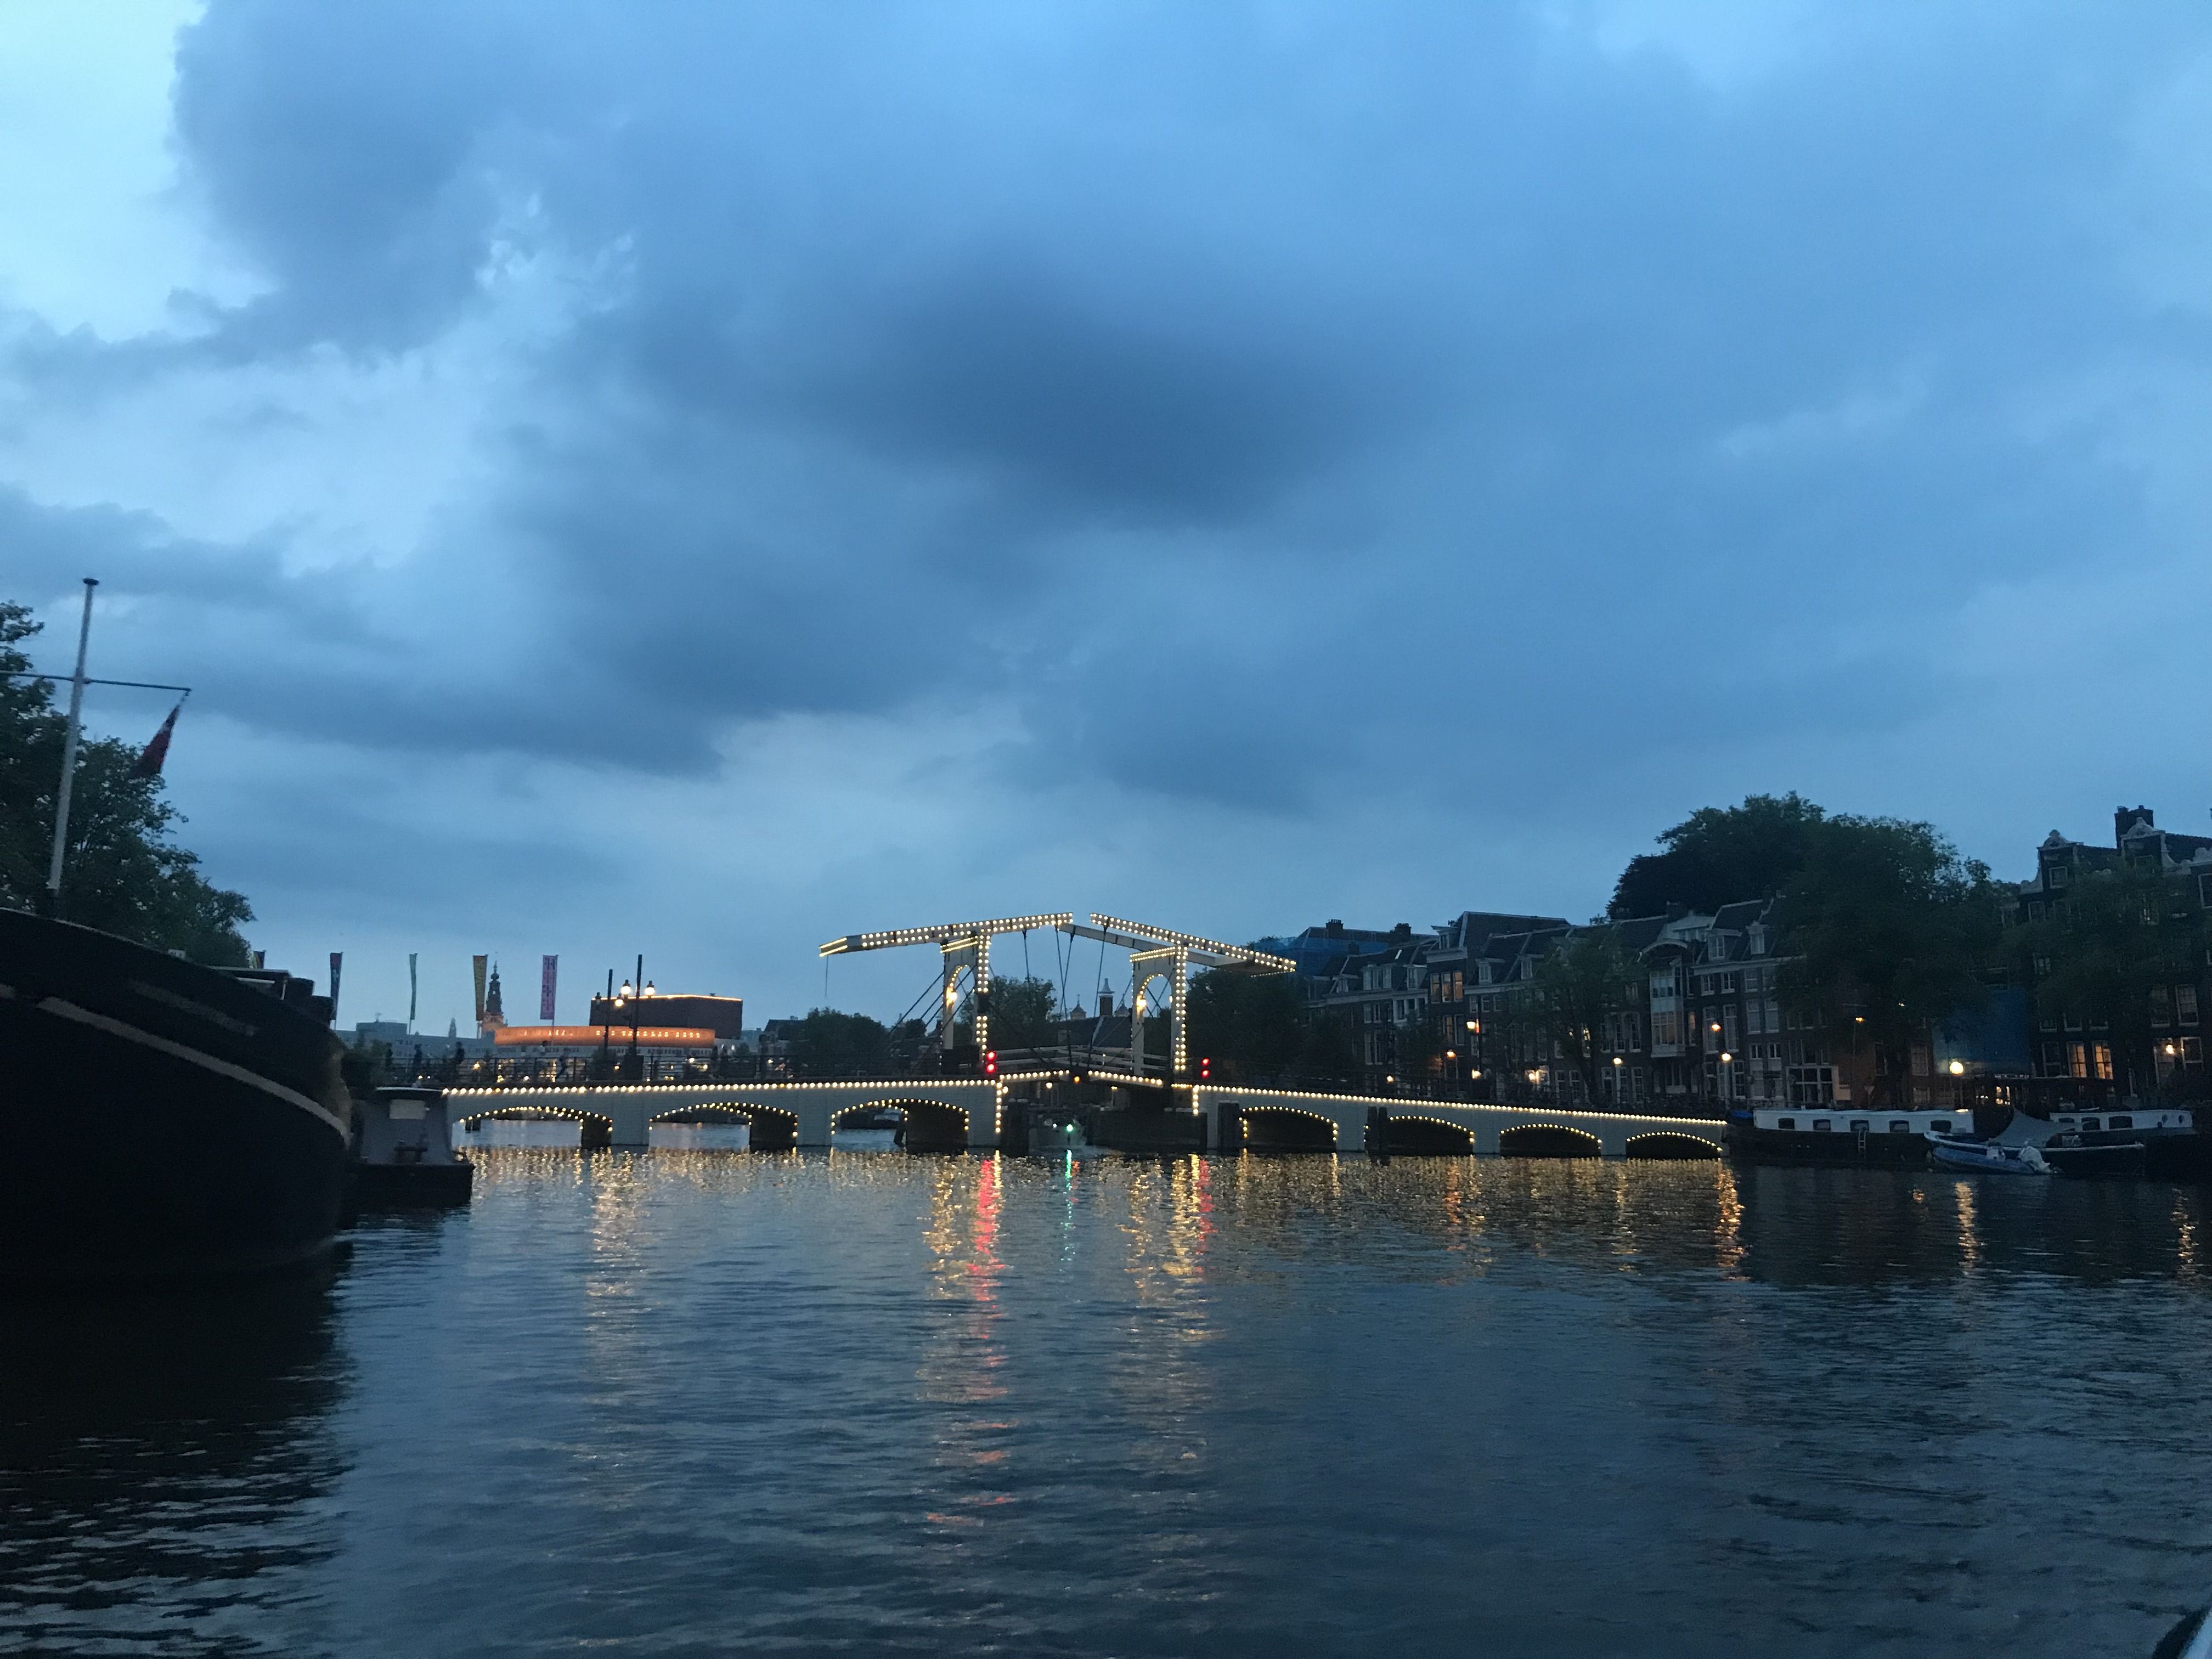 Friendship River Cruise , Amsterdam: All year round